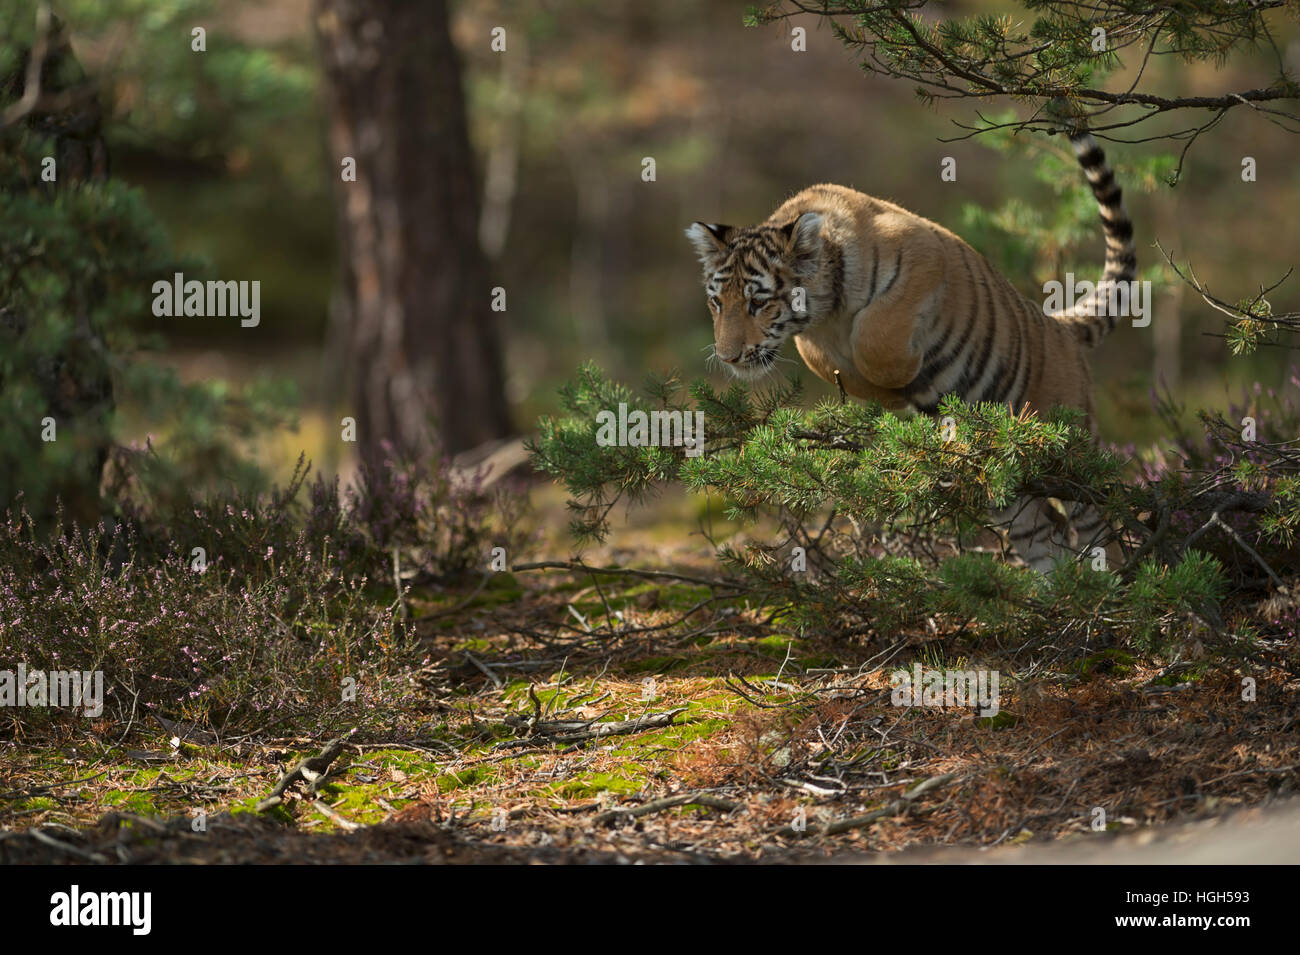 Royal Bengal Tiger / Koenigstiger ( Panthera tigris ),running, jumping through the undergrowth of coniferous woodland. Stock Photo